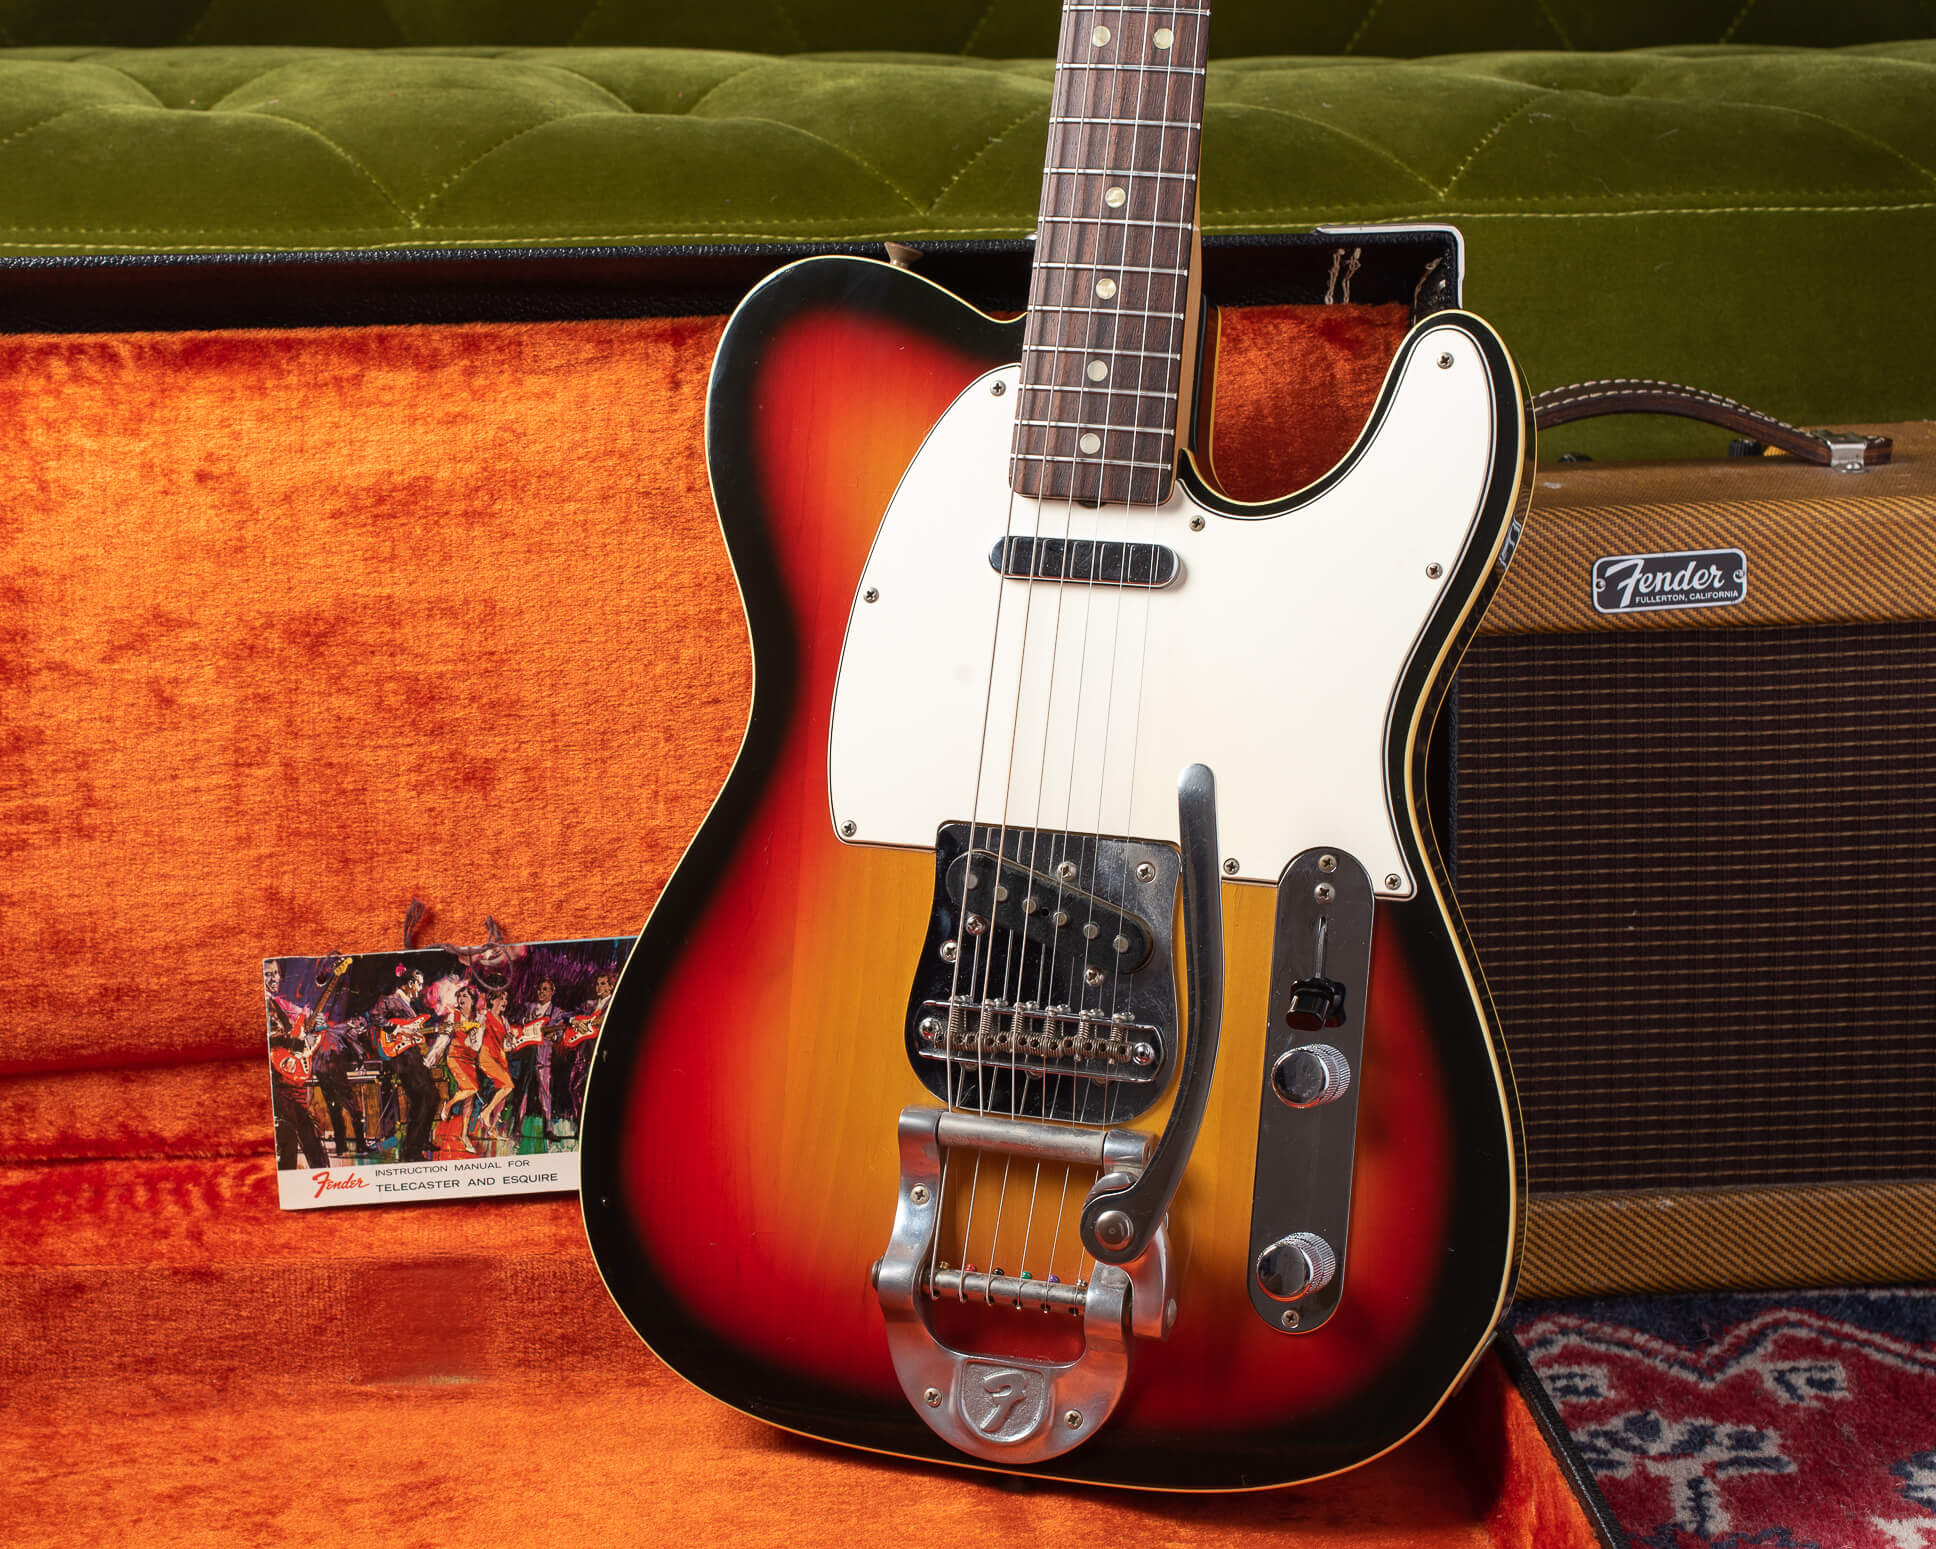 1968 Fender Telecaster Custom dating and value